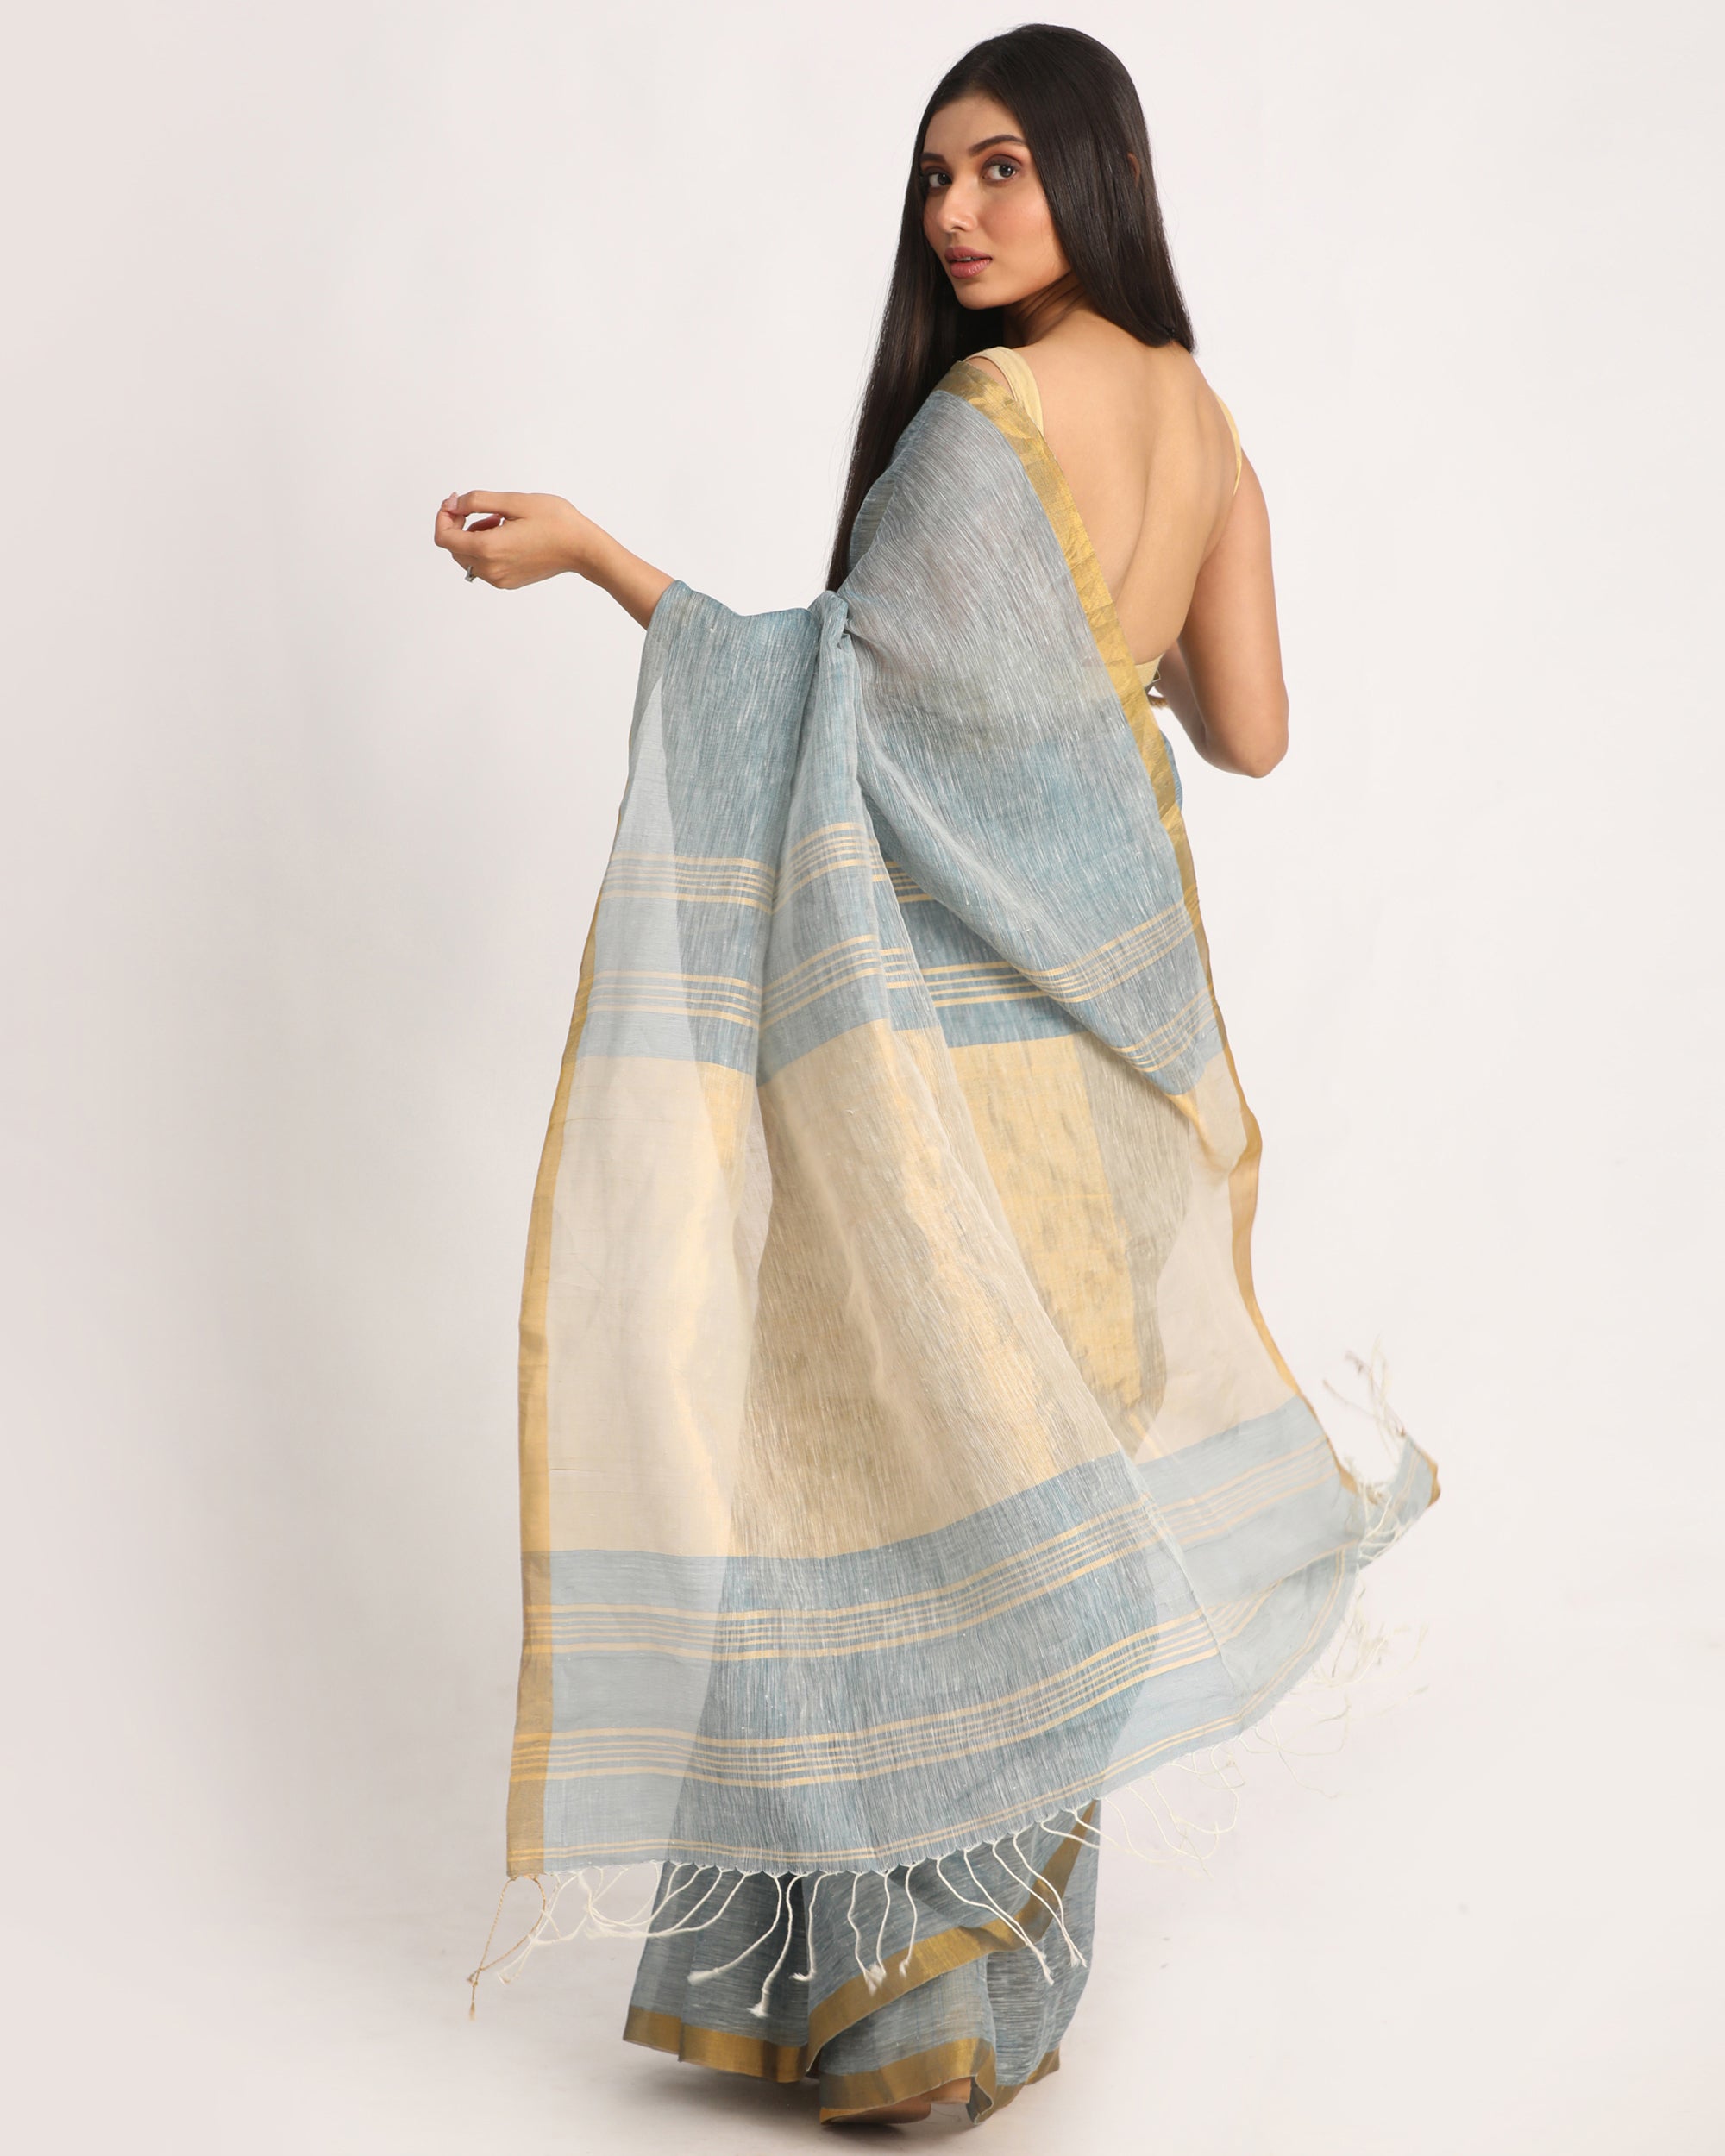 Women's Silver Blue Traditional Handloom Tissue Linen Saree - Angoshobha